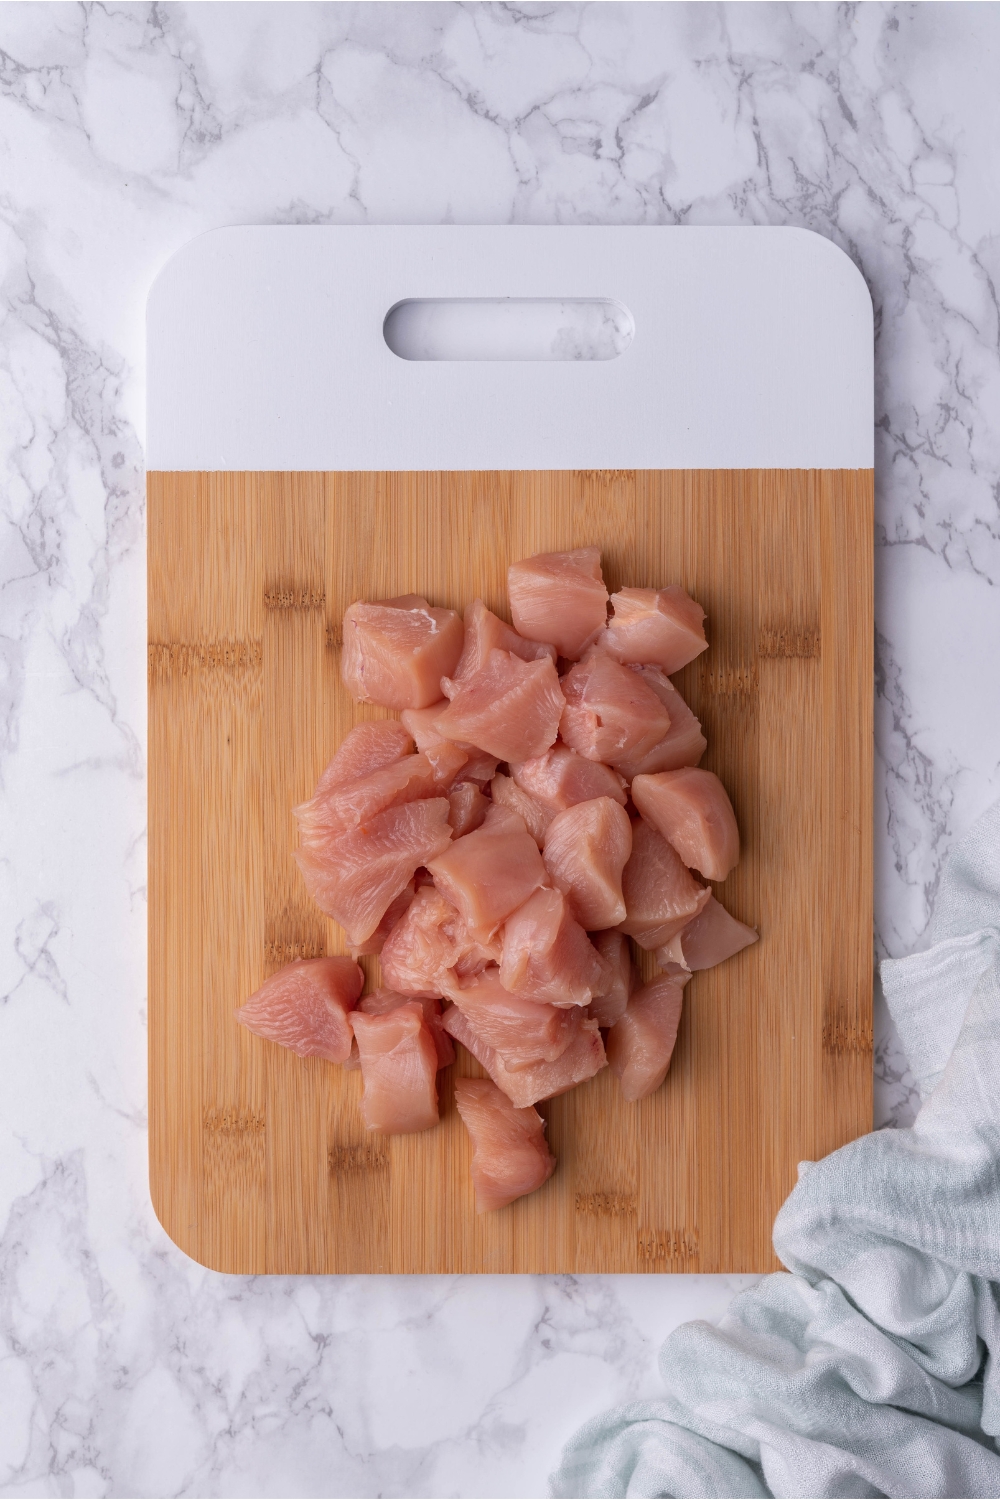 Raw chicken breast pieces on a wood cutting board.